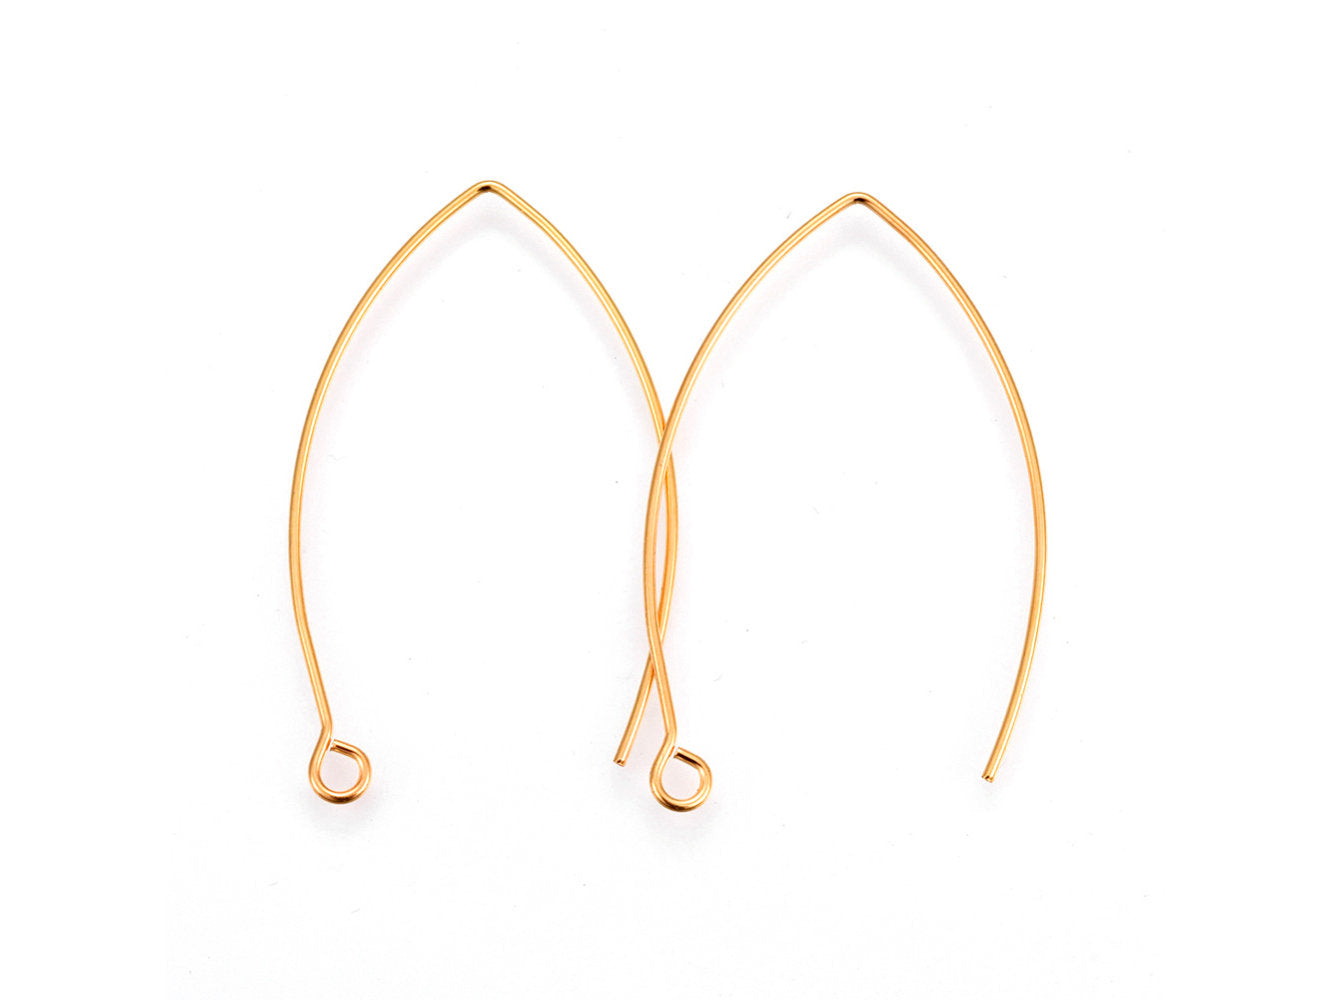 10 Stainless Steel Marquis earring hooks 40x24mm - Golden